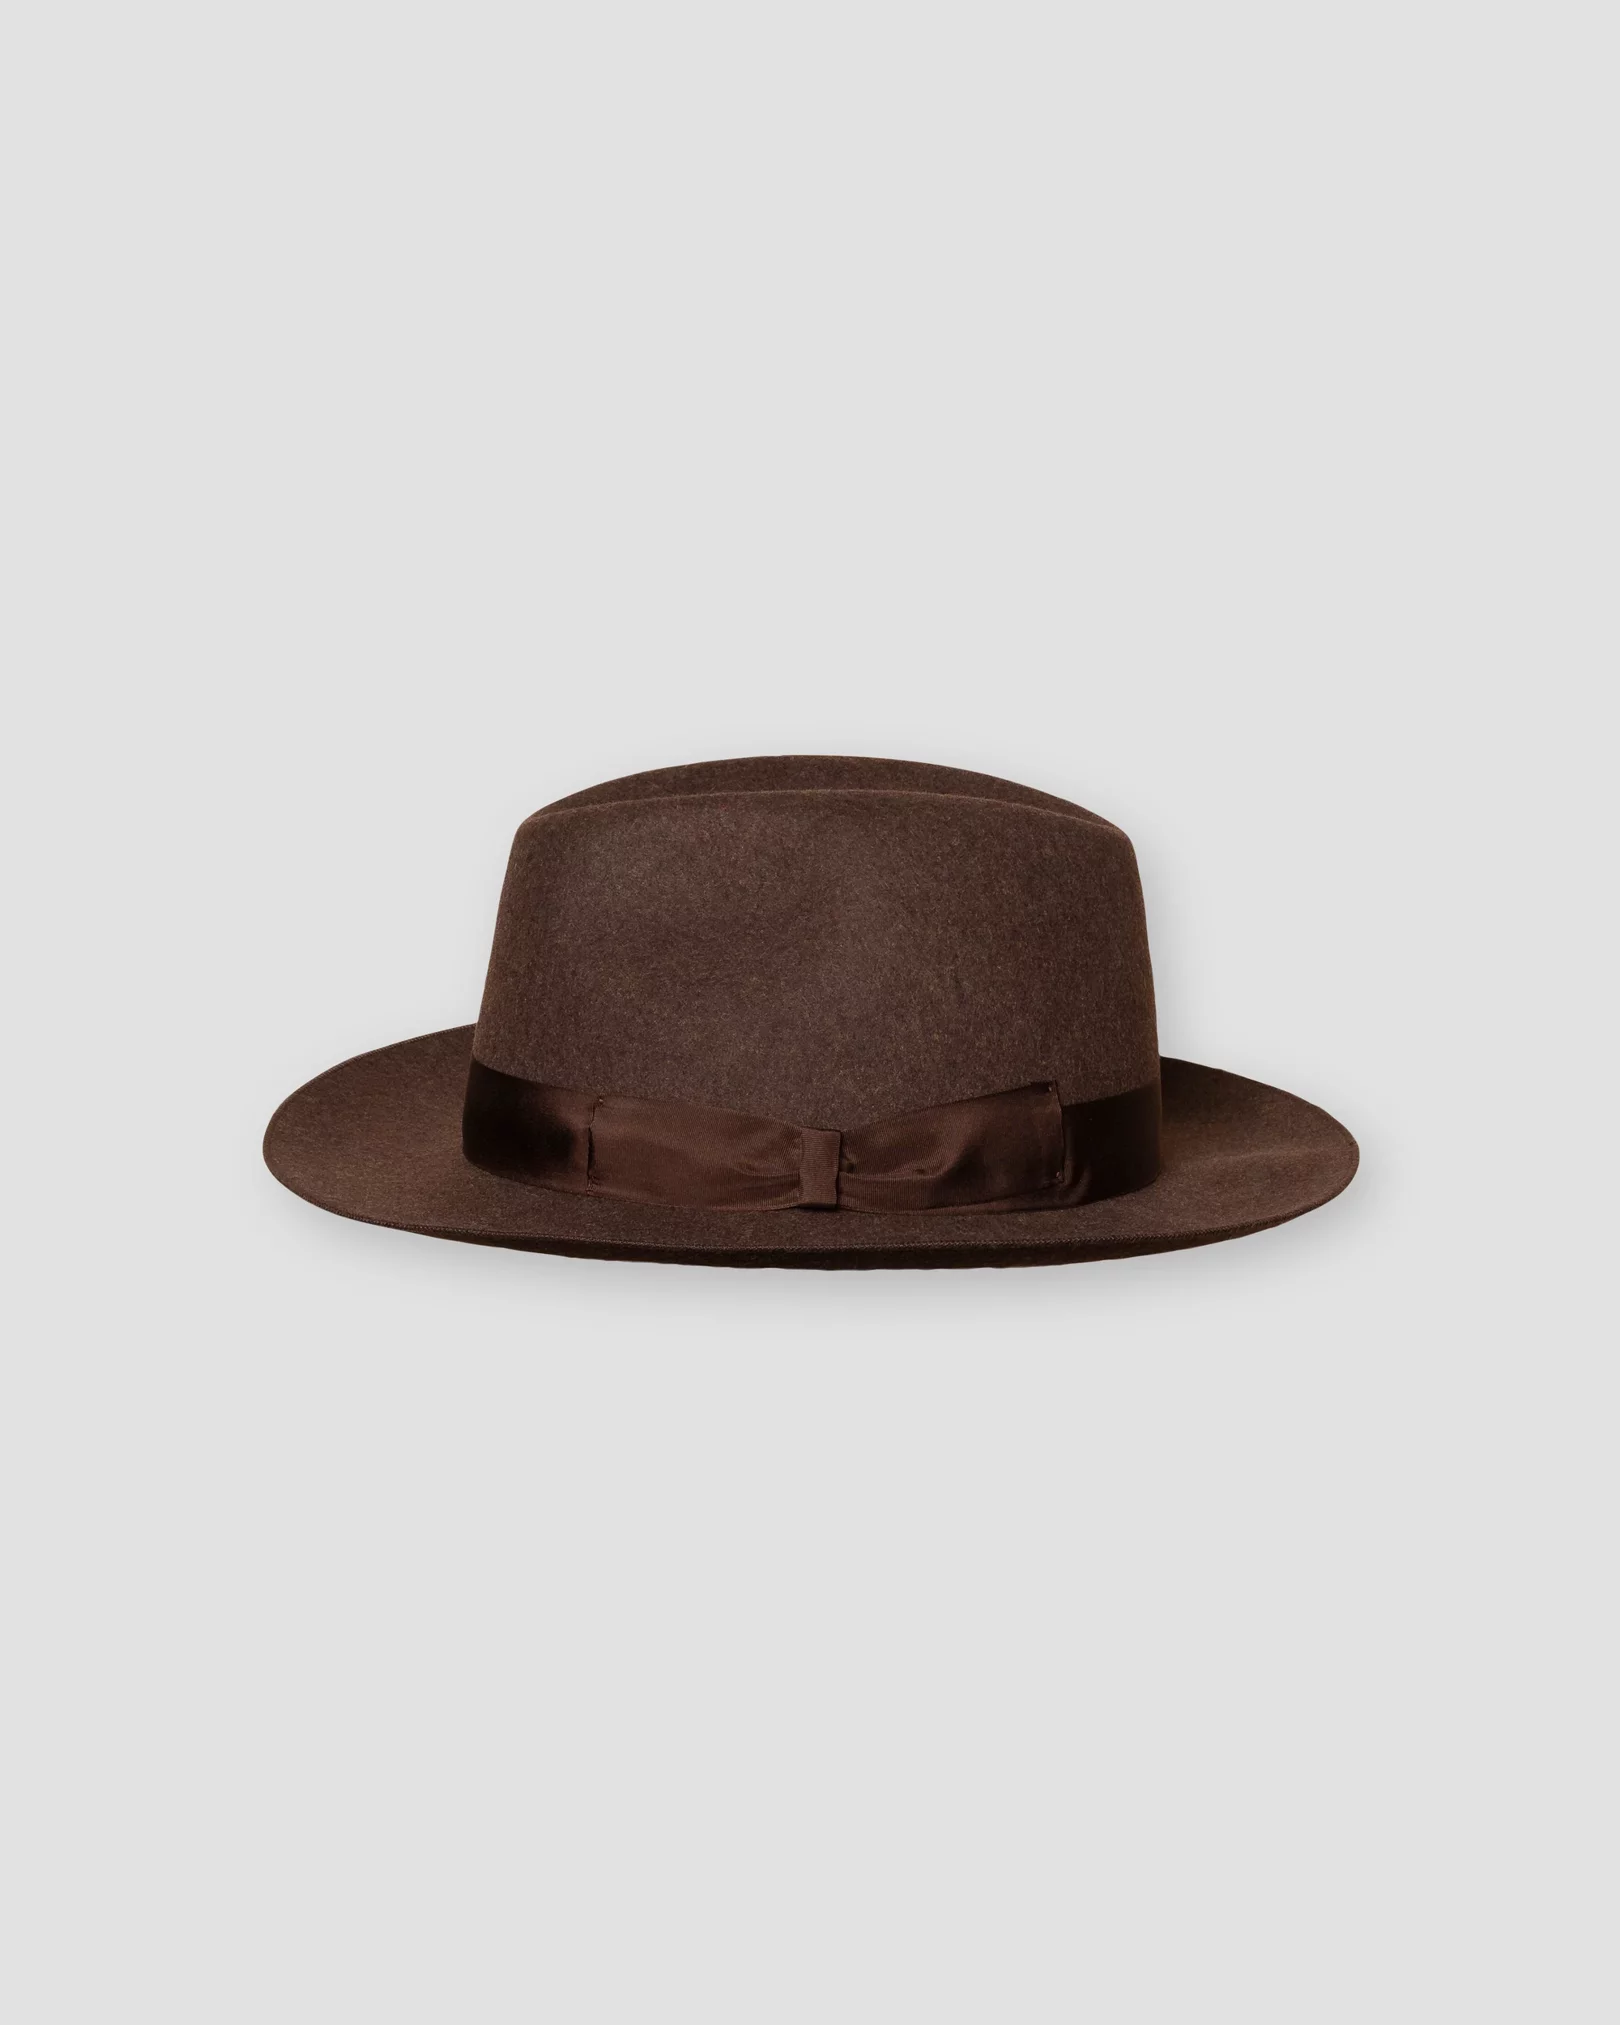 Eton - dark brown crushable hat